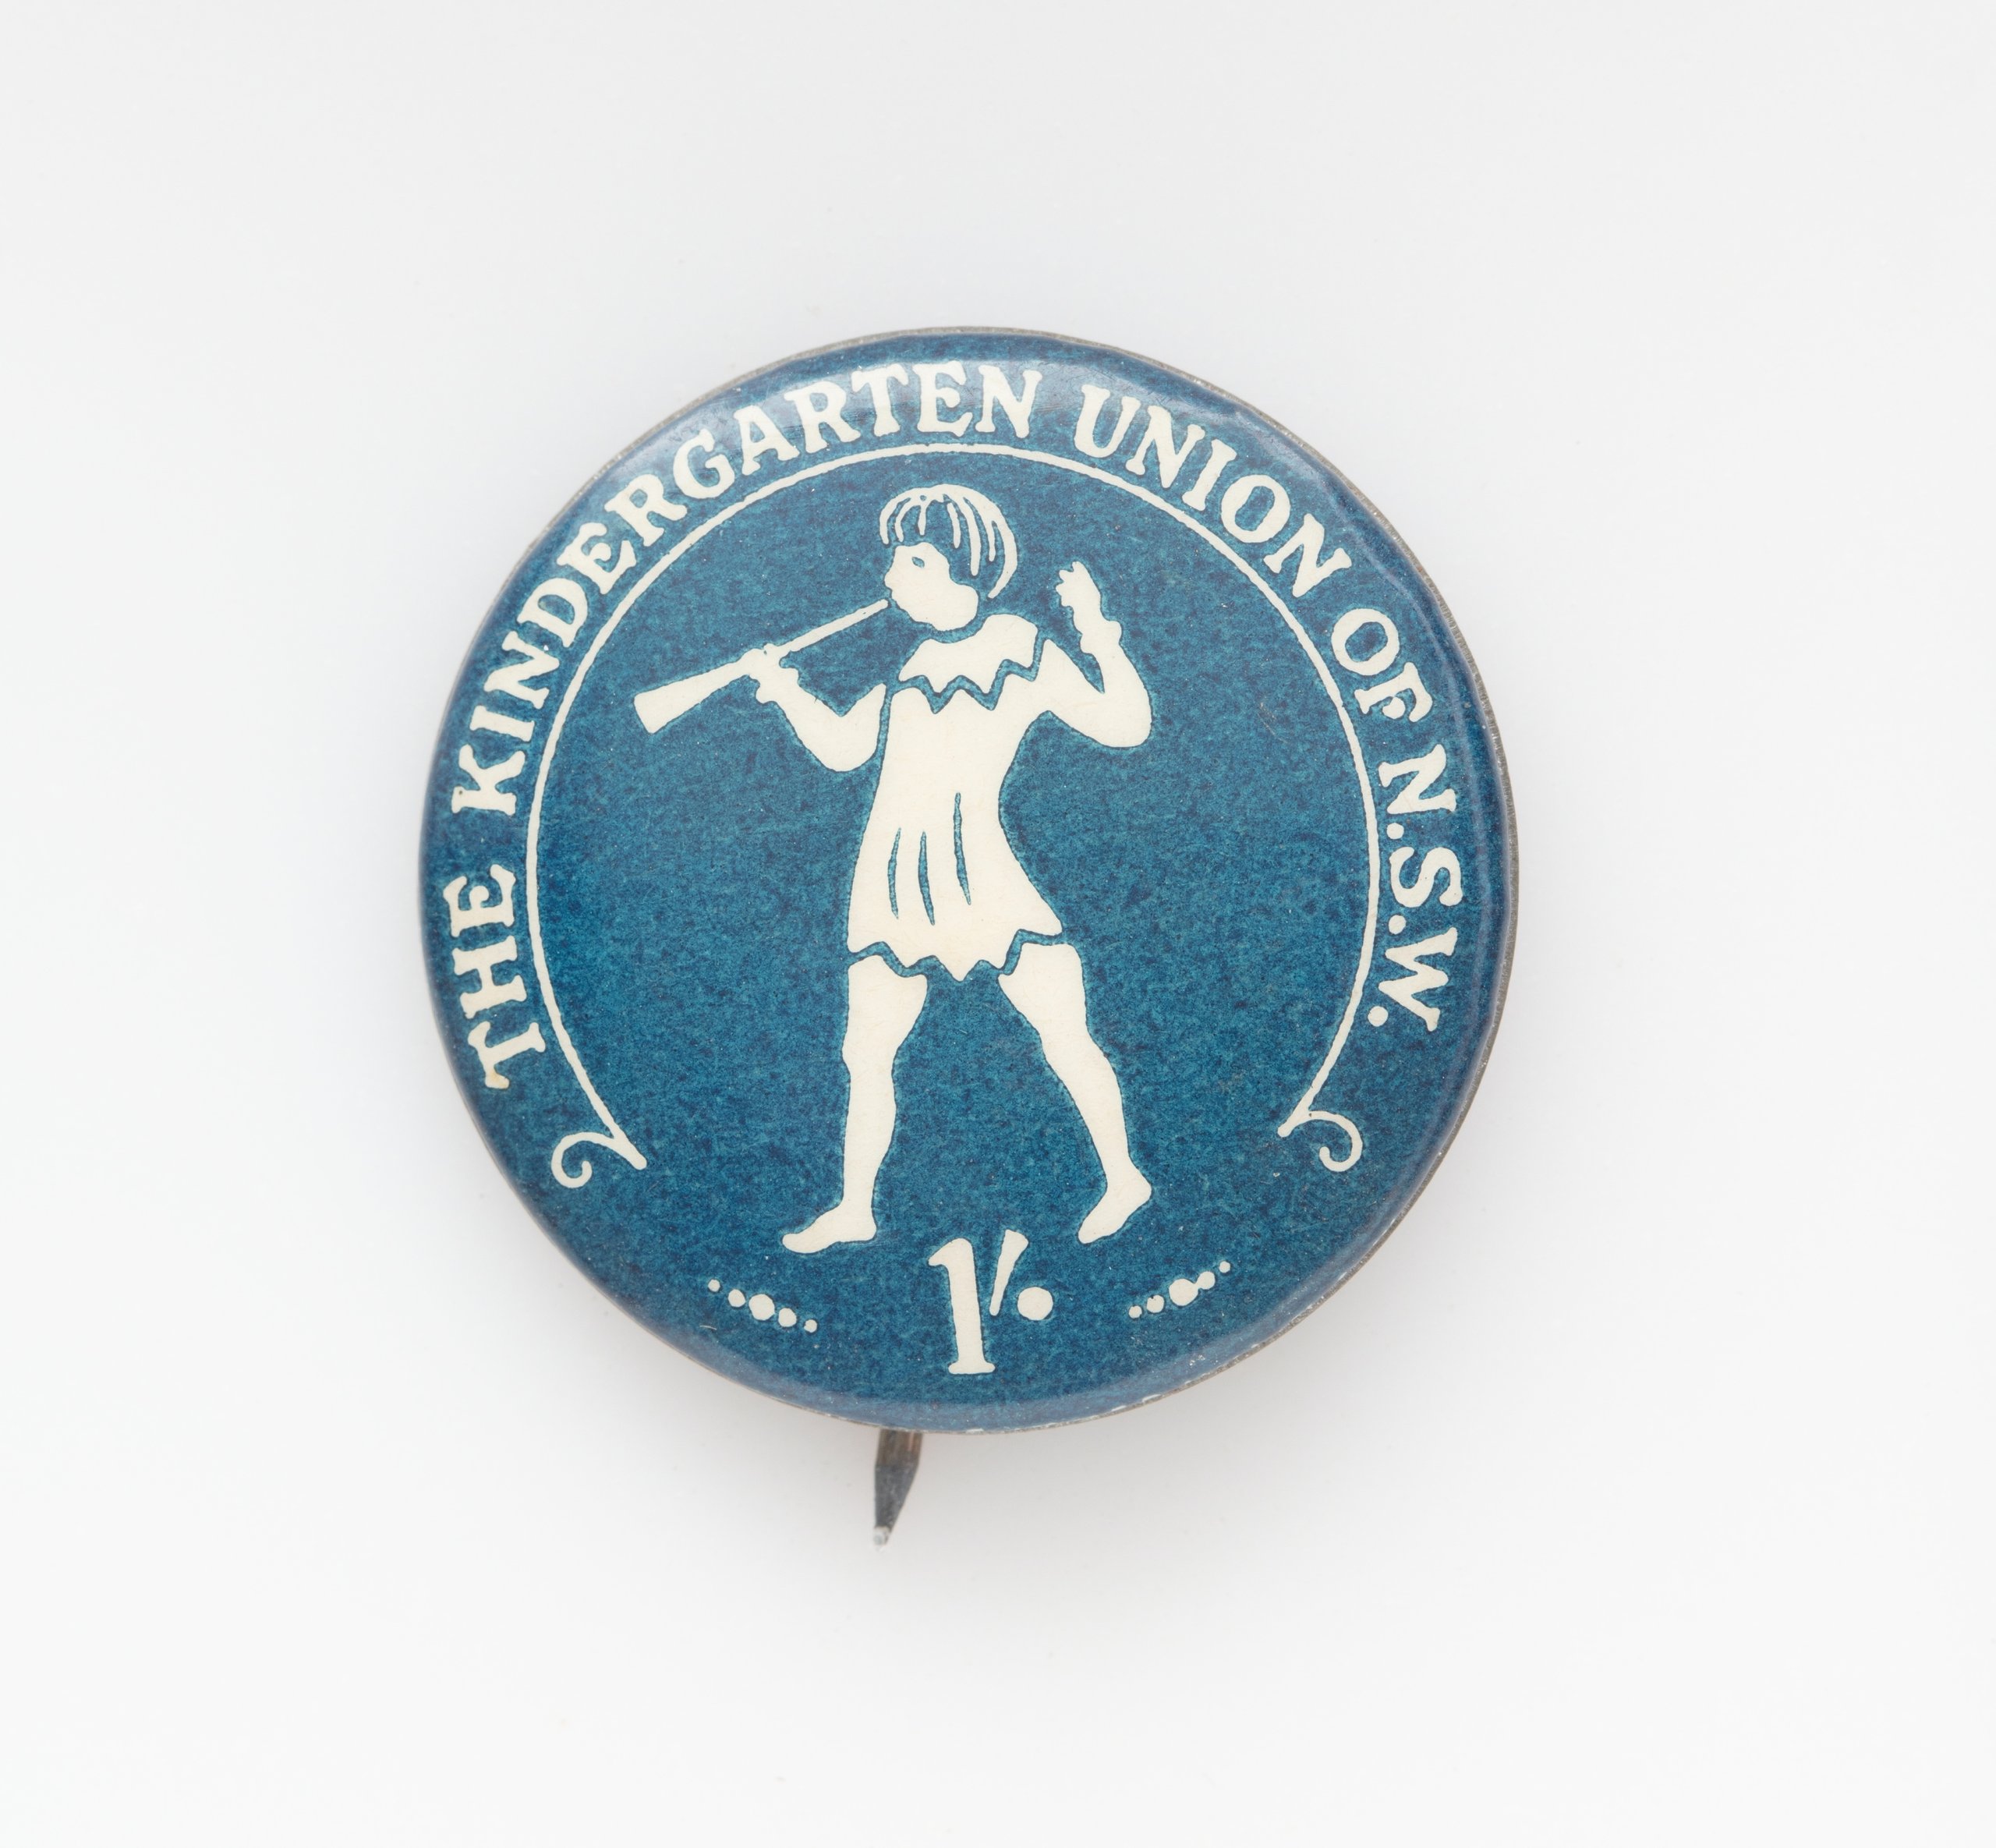 'The Kindergarten Union of NSW' badge